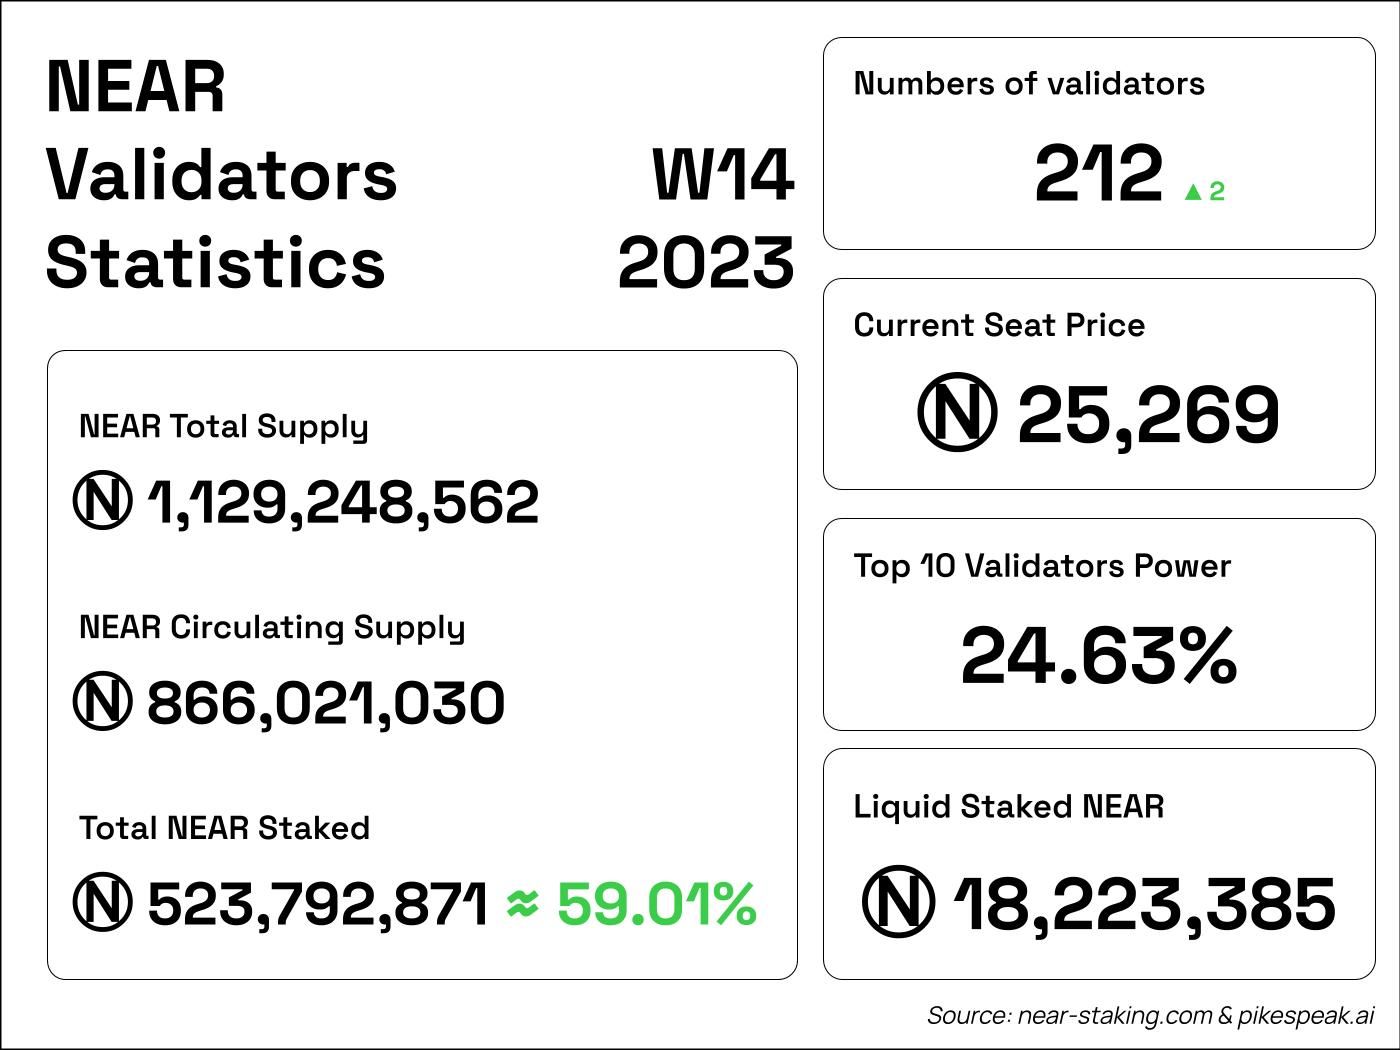 NEAR validators statistics week 14